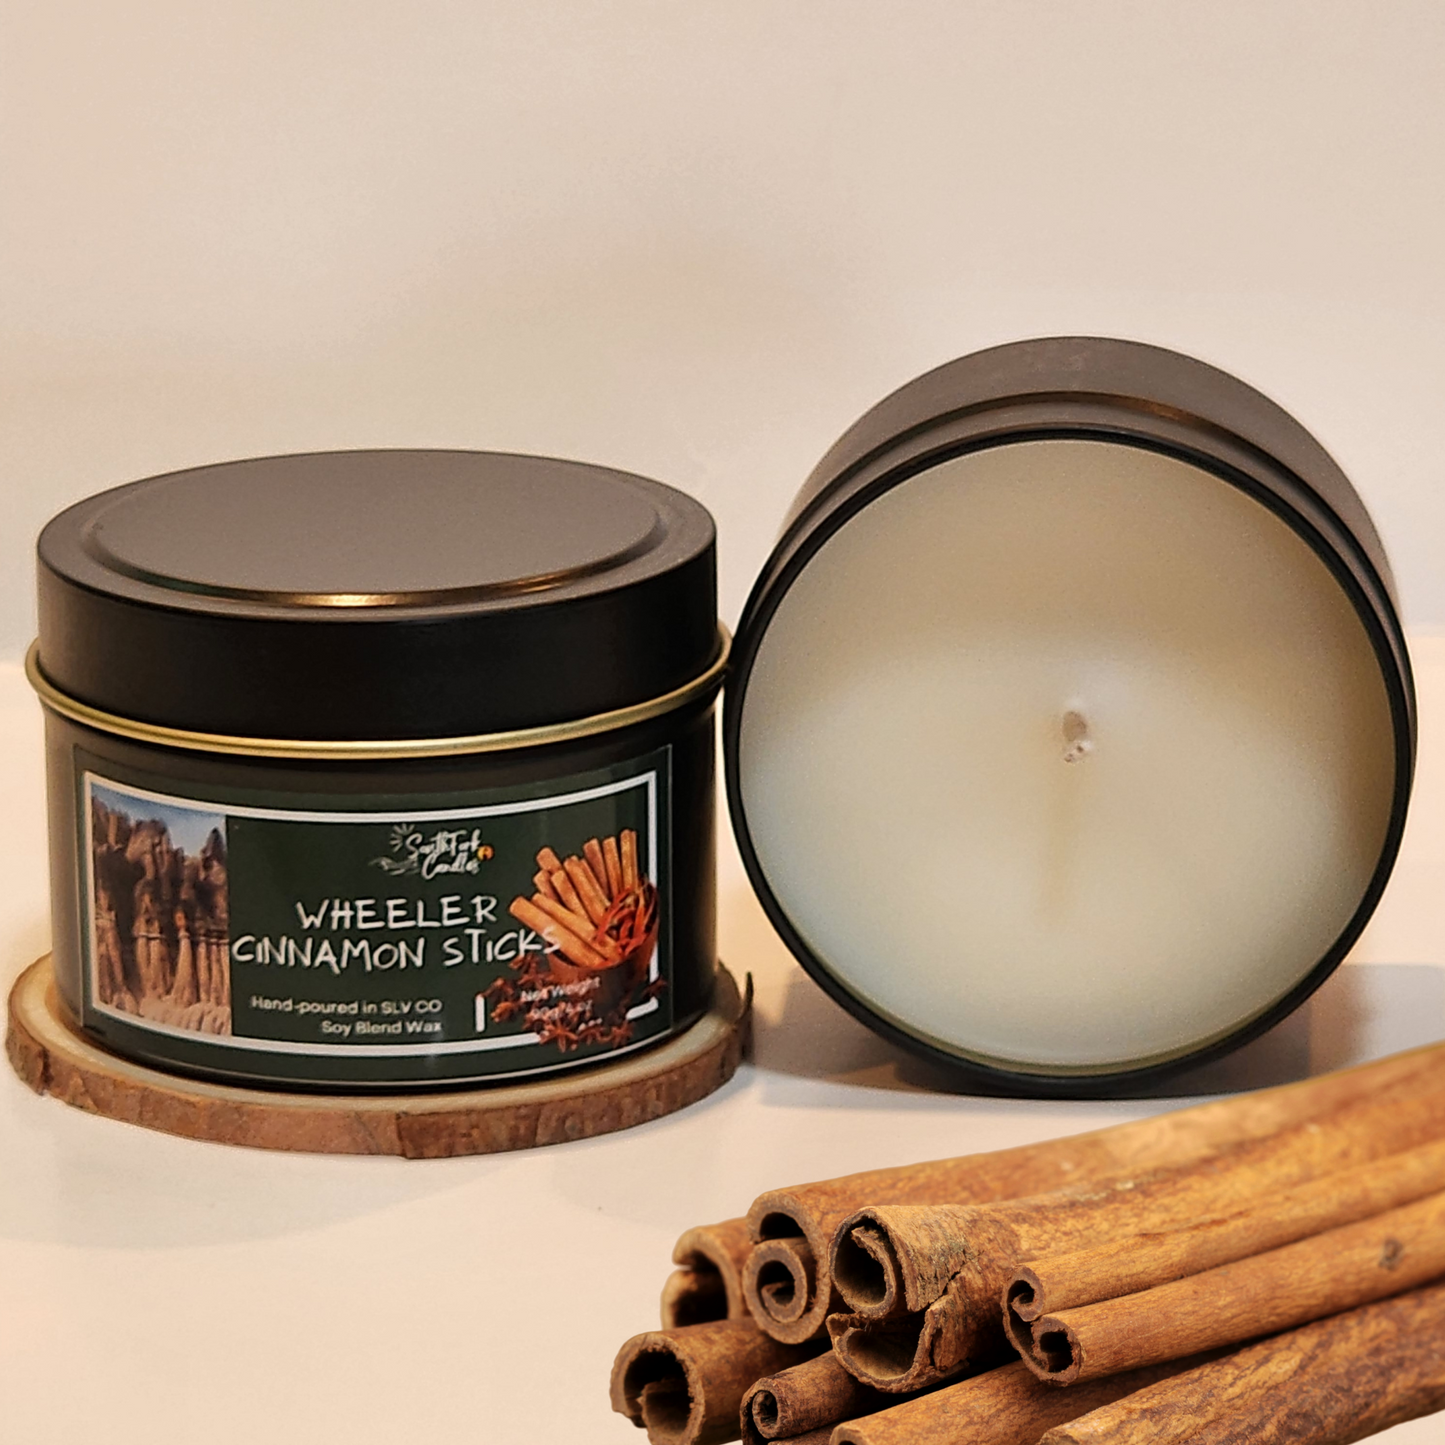 Cinnamon Sticks - Wheeler Cinnamon Sticks Candle